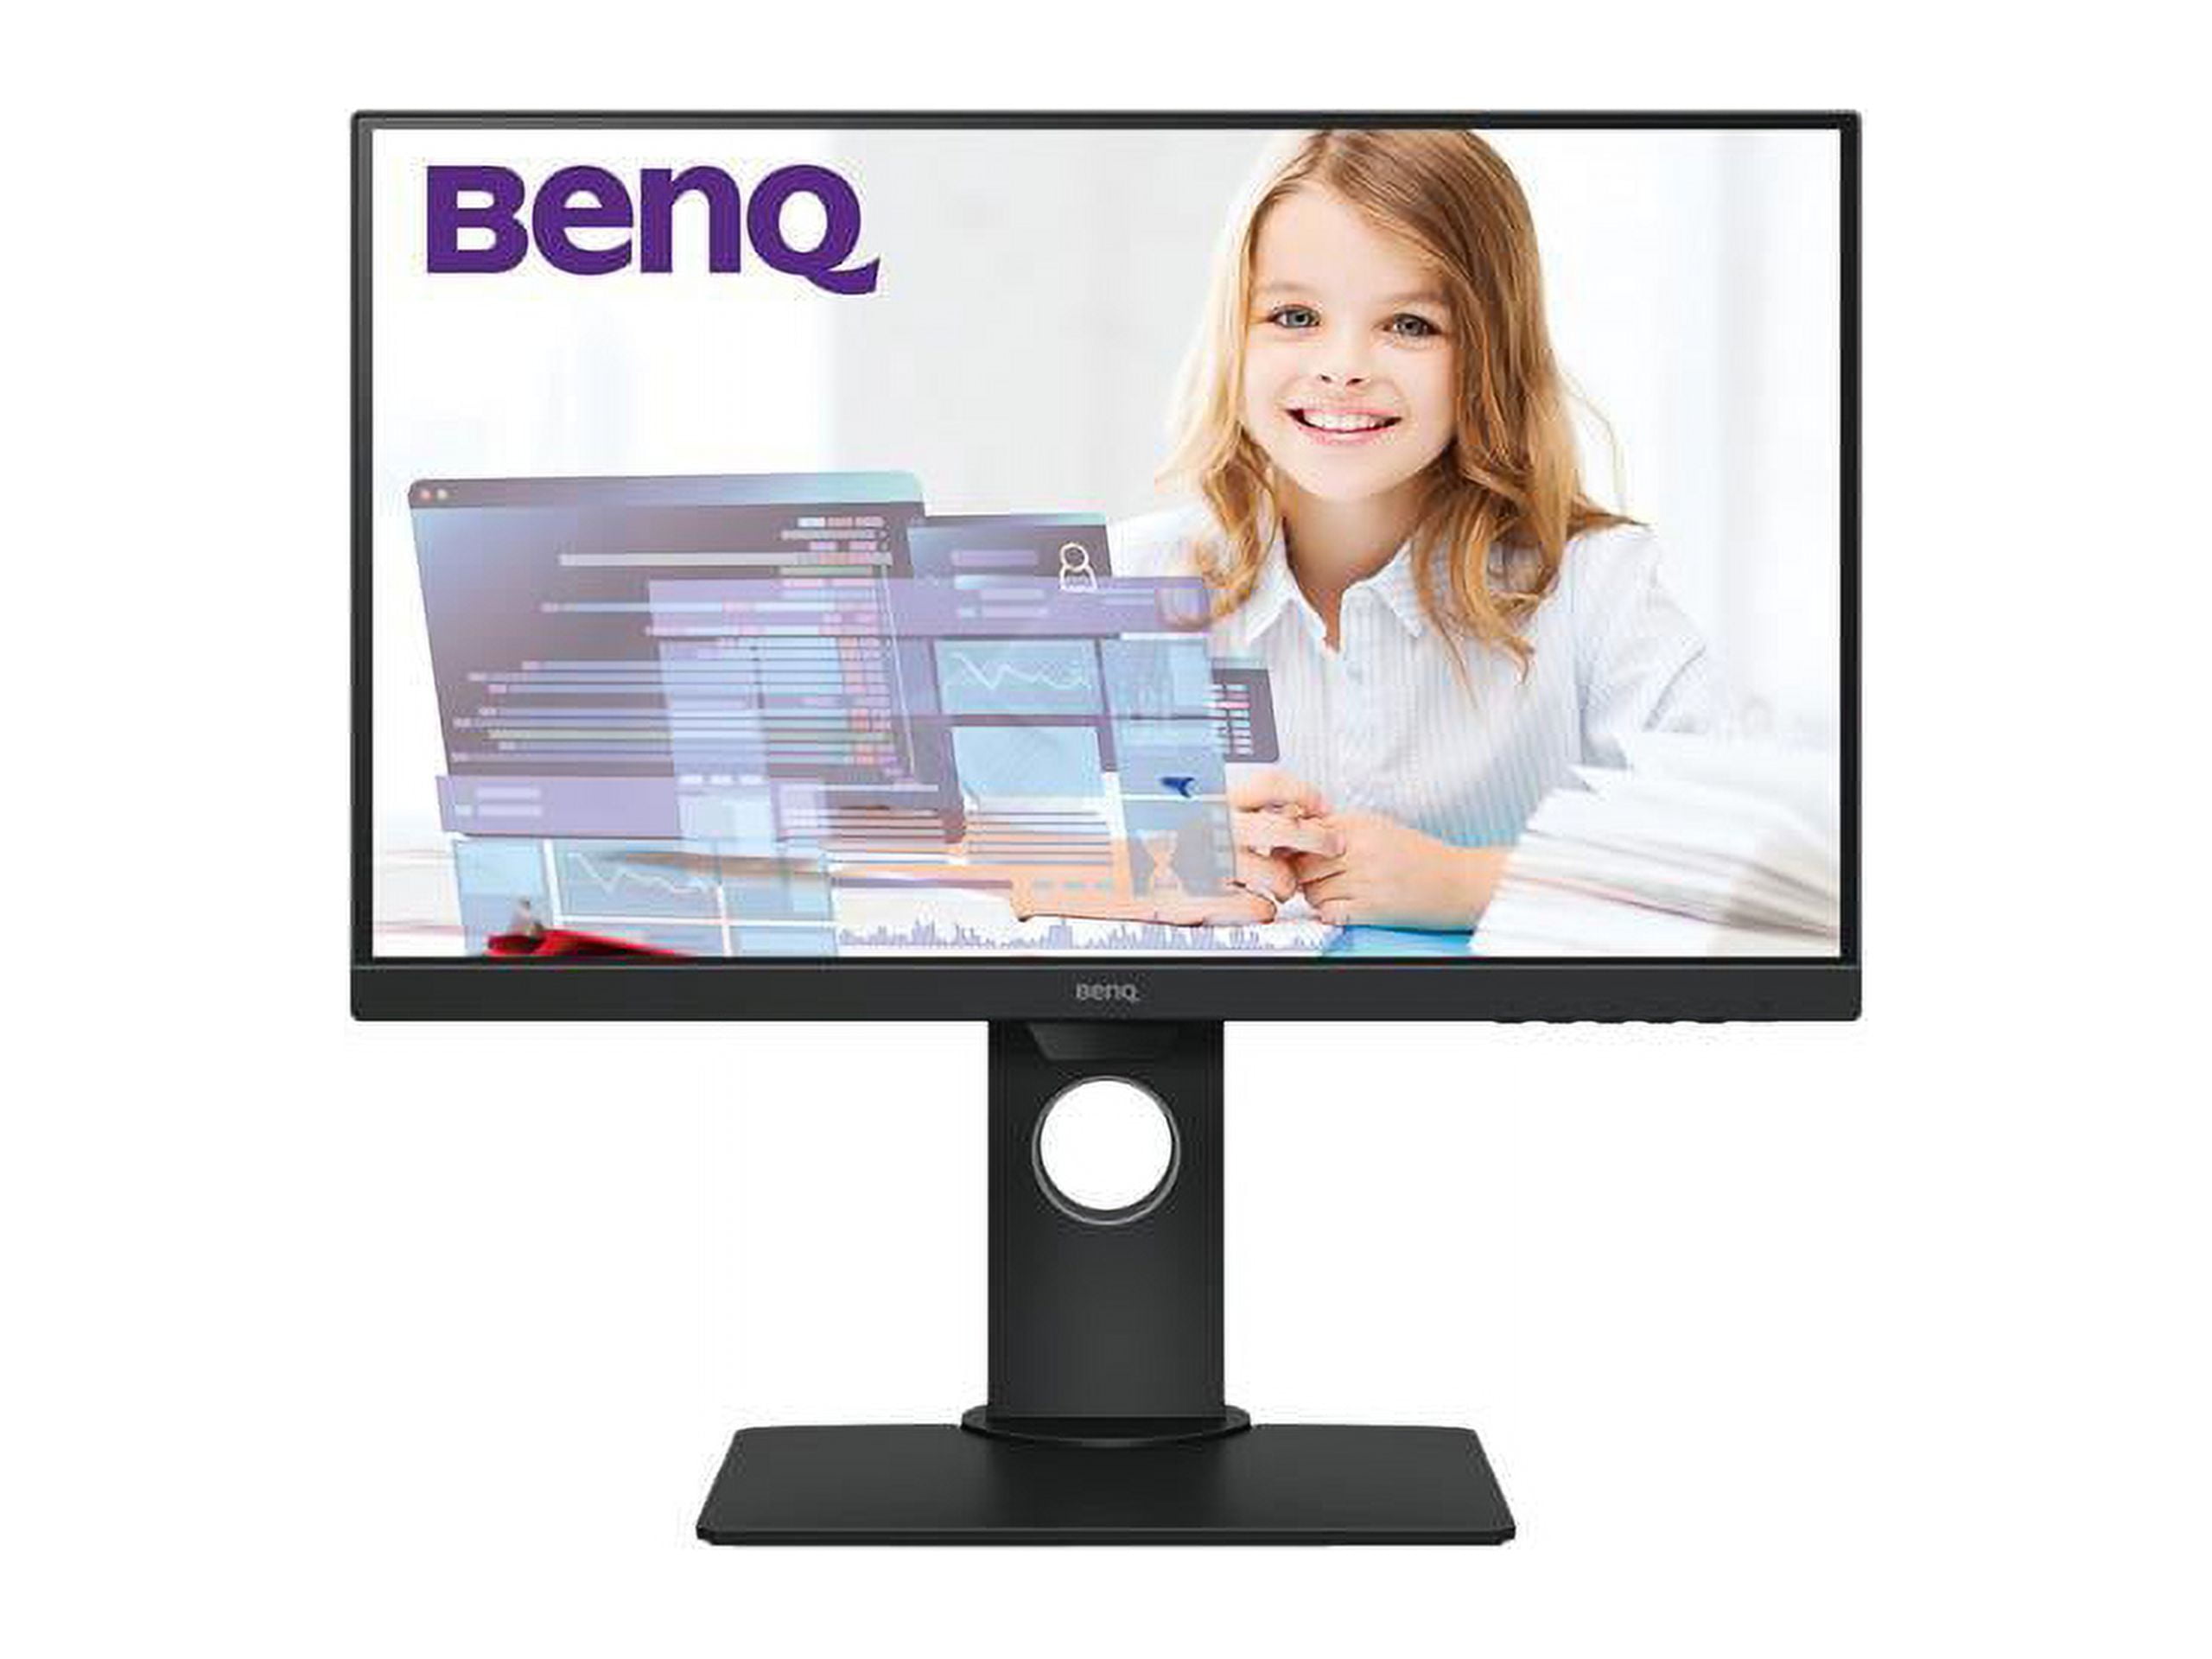  BenQ GW2780 Computer Monitor 27 FHD 1920x1080p, IPS, Eye-Care Tech, Low Blue Light, Anti-Glare, Adaptive Brightness, Tilt  Screen, Built-In Speakers, DisplayPort, HDMI